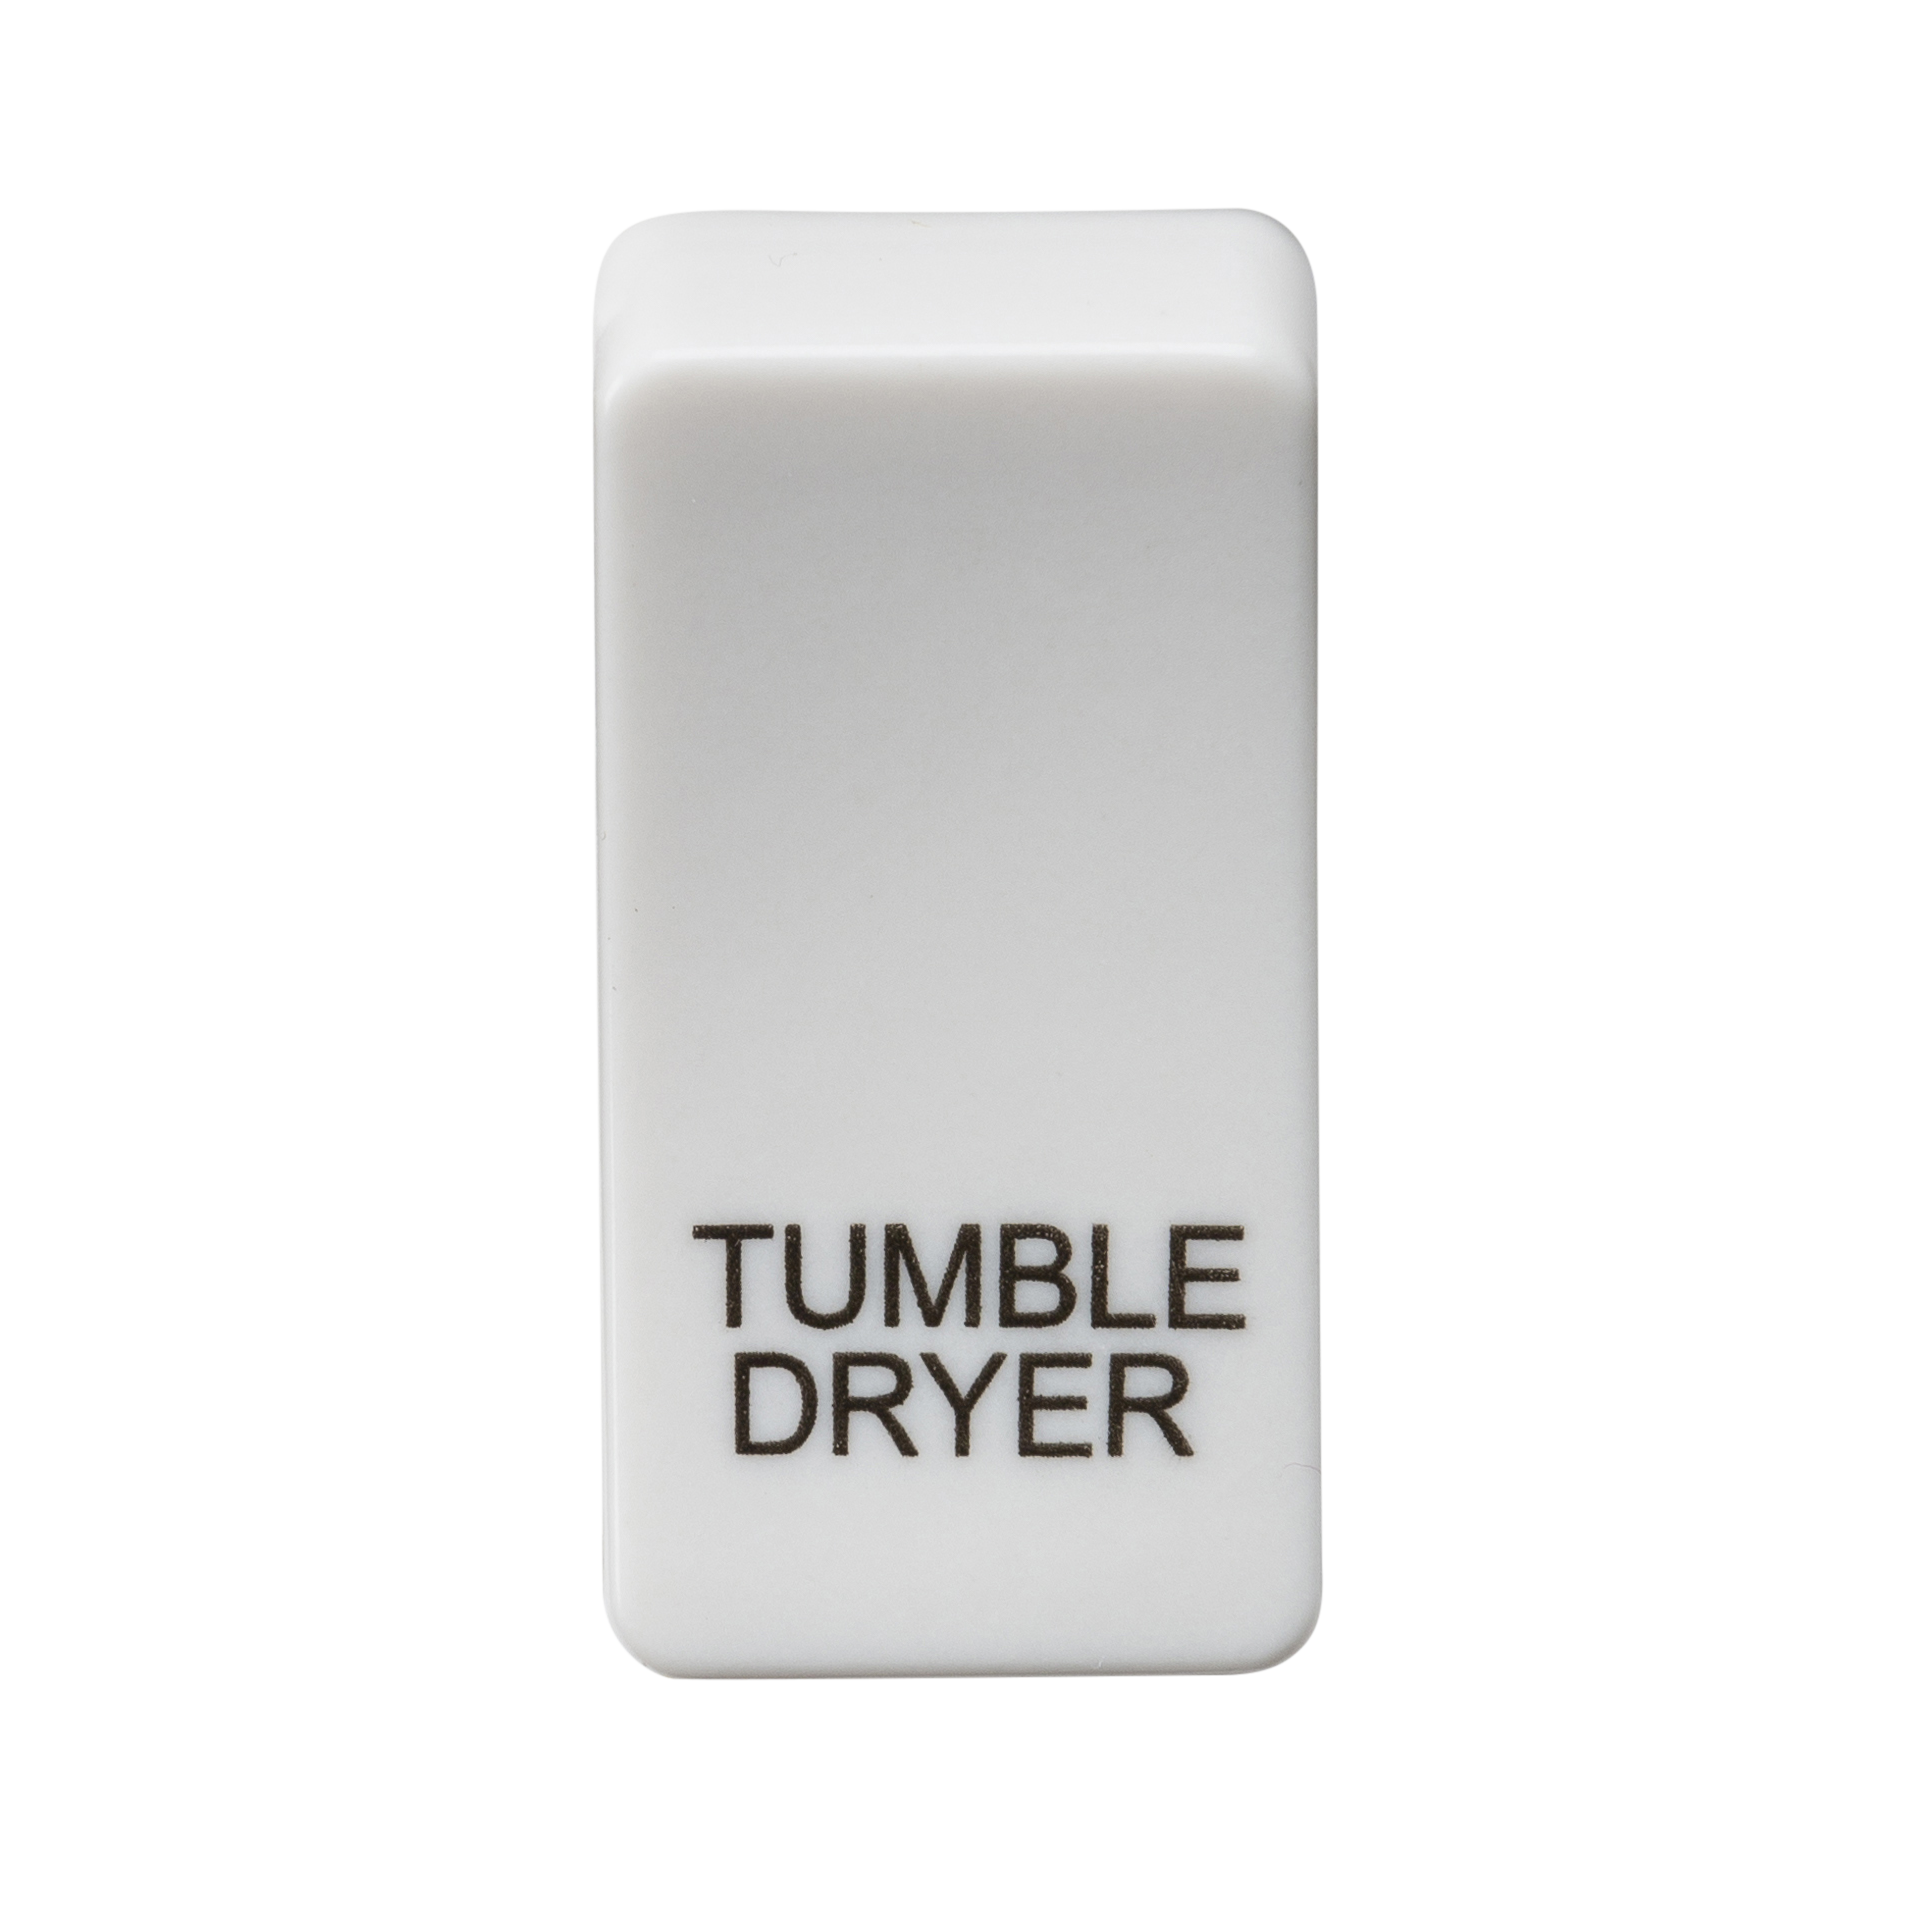 Switch Cover "Marked TUMBLE DRYER" - White - GDDRYU 